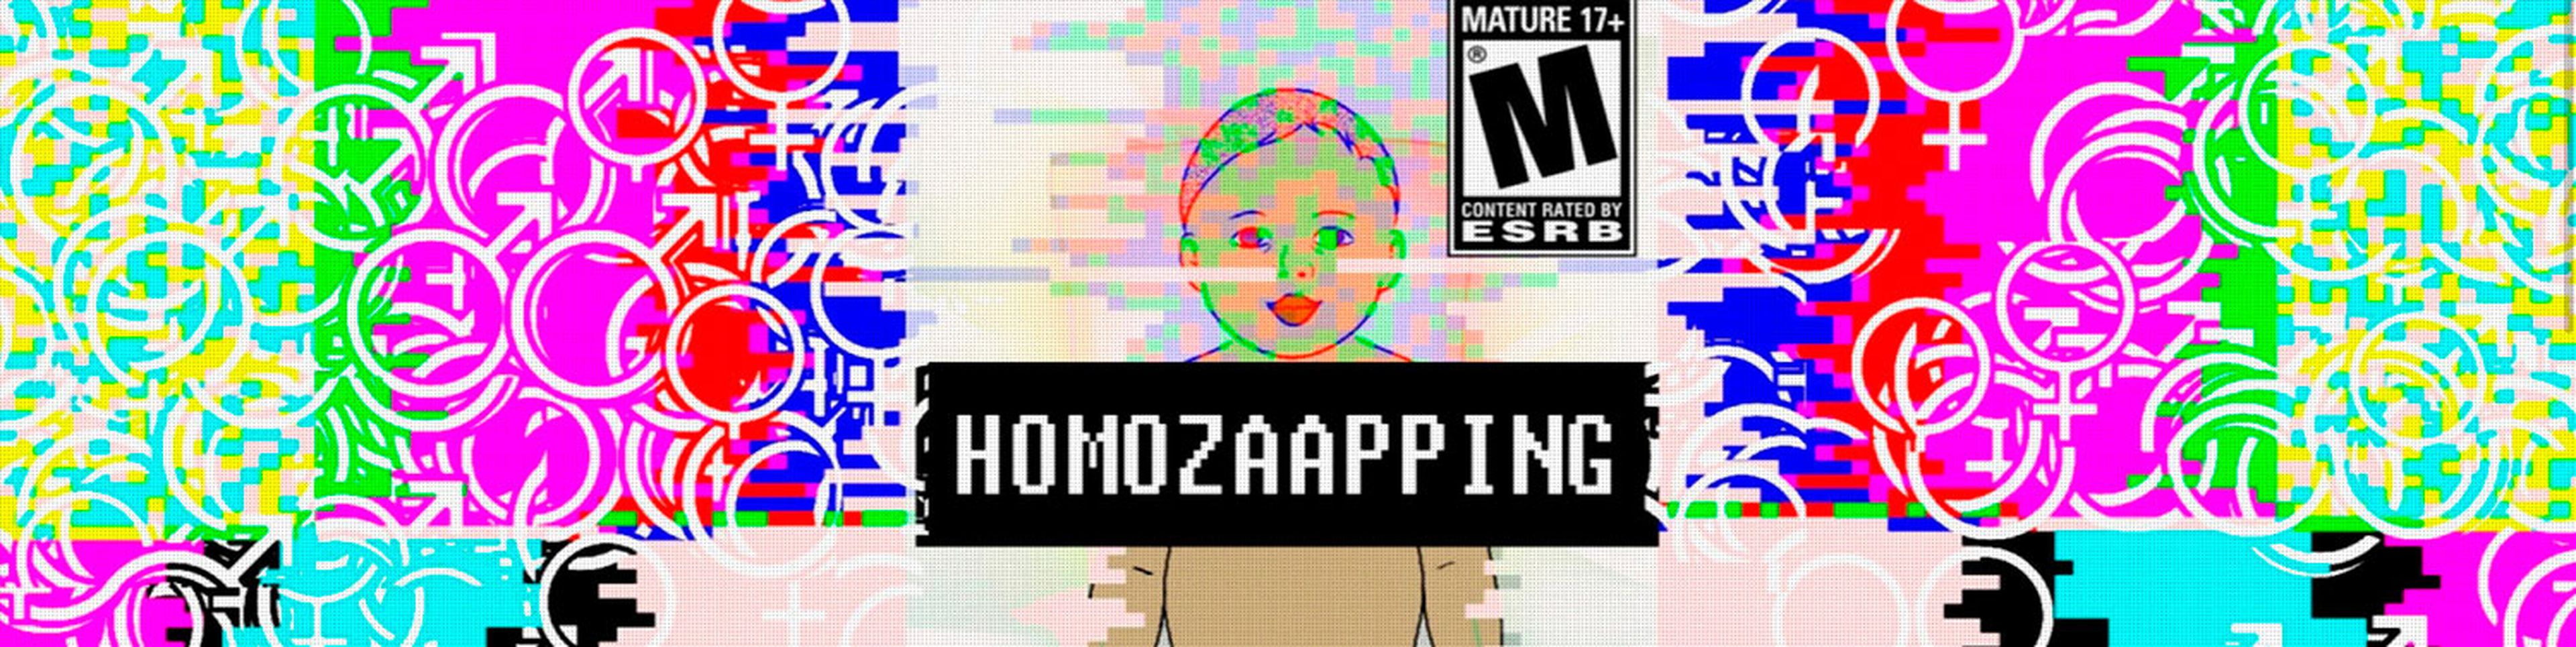 Homozapping